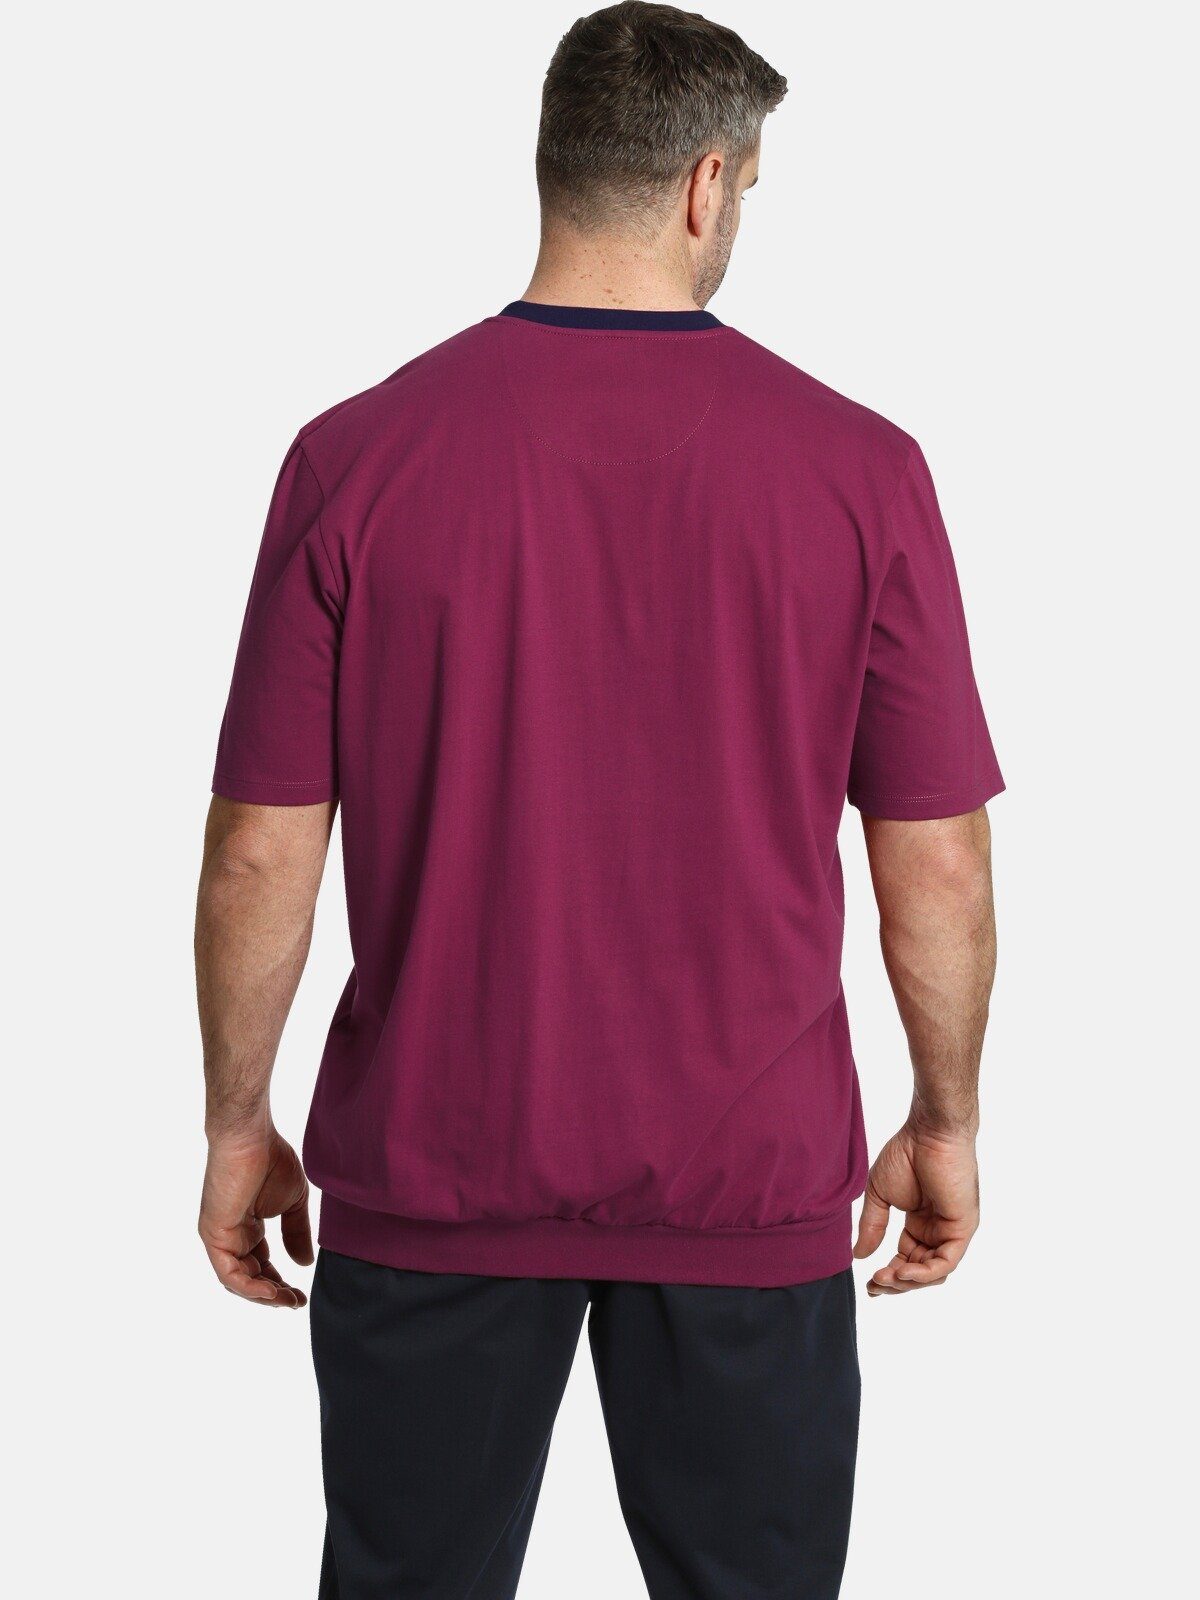 Charles Colby T-Shirt EARL Comfort MEGAT Fit Kollektion, +Fit